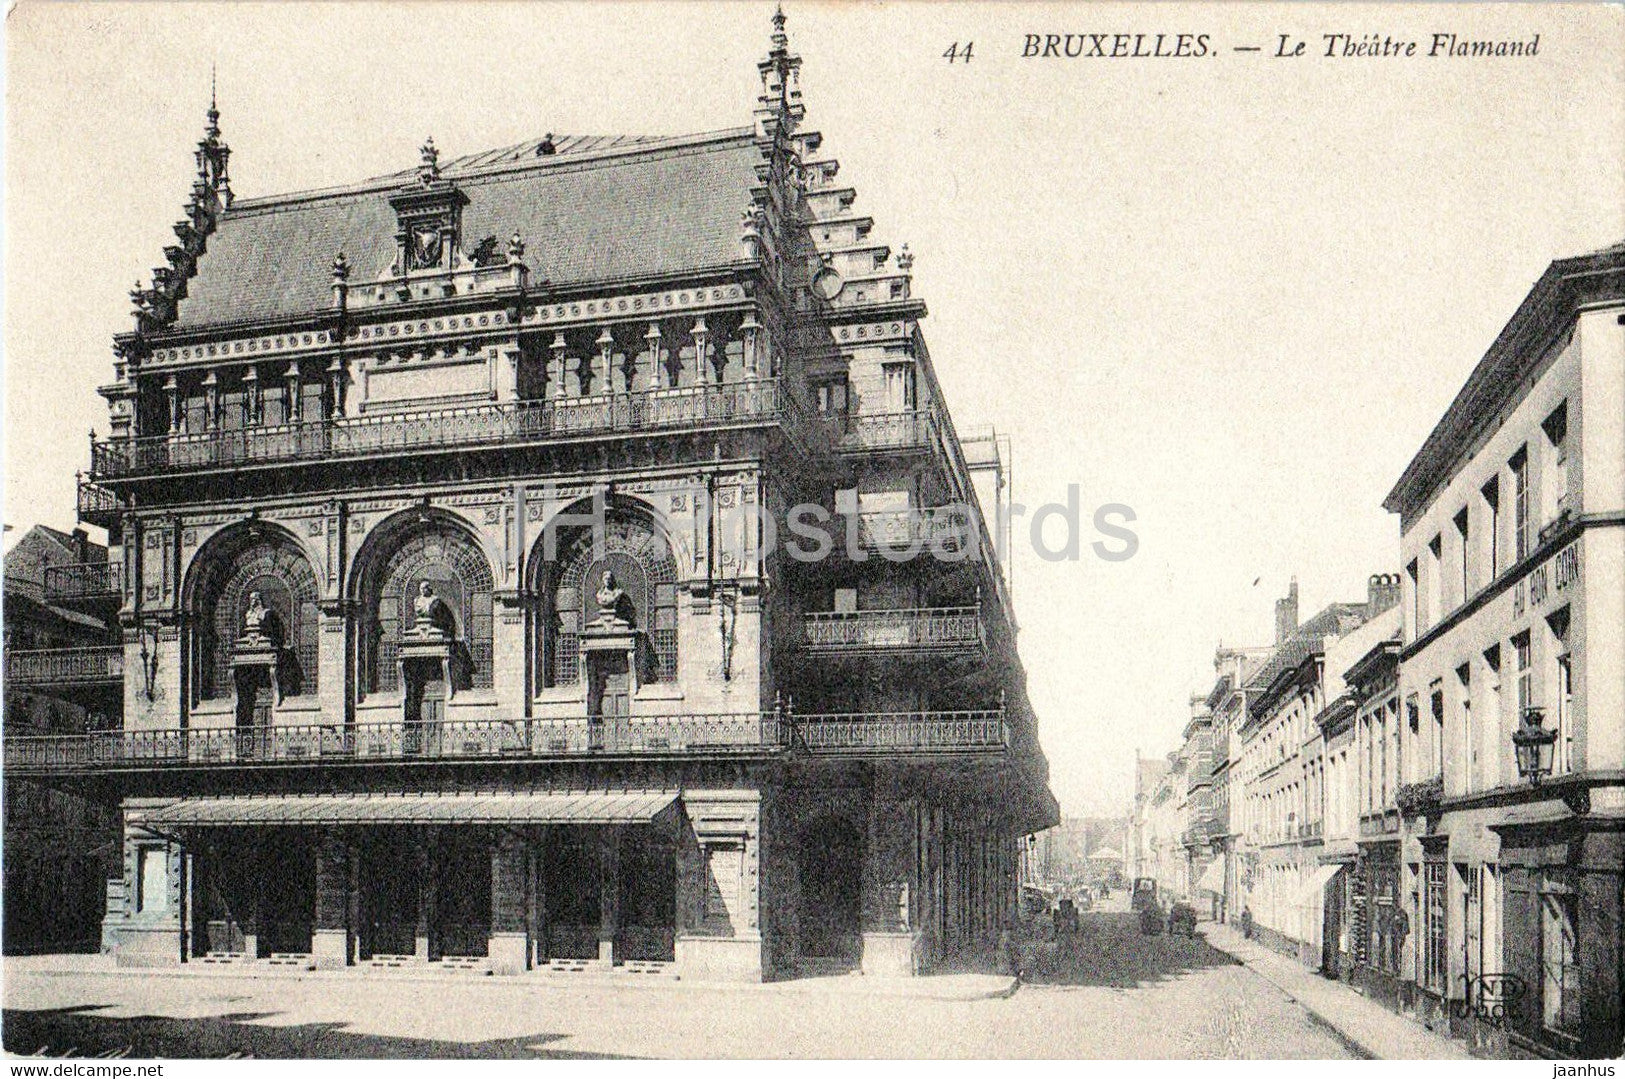 Bruxelles - Brussels - Le Theatre Flamand - 44 - old postcard - Belgium - unused - JH Postcards